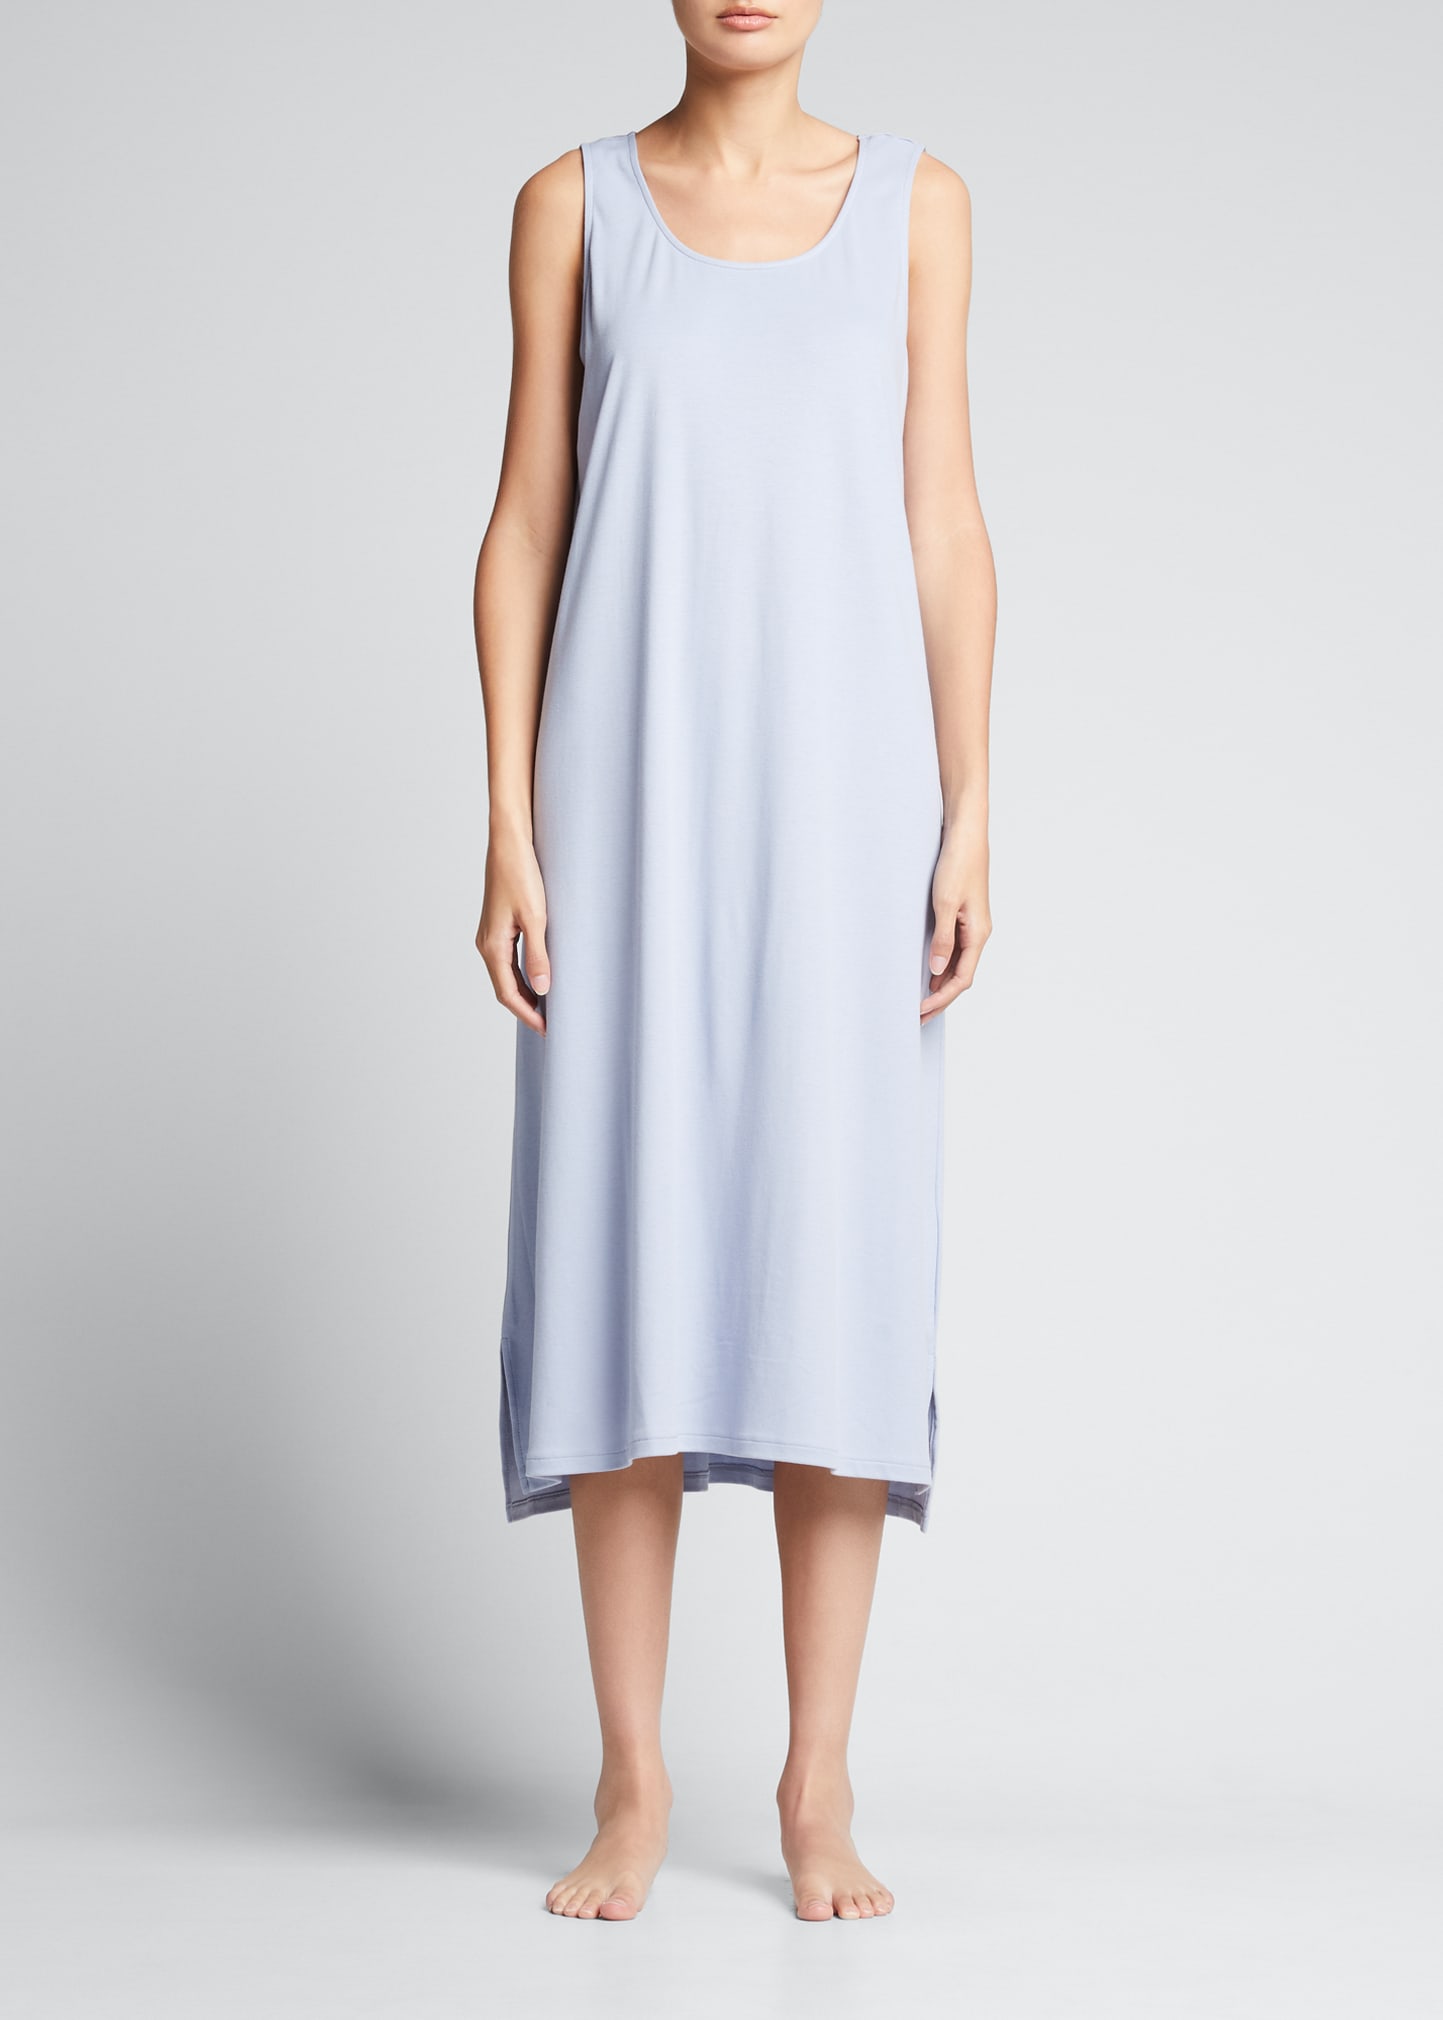 Eileen Fisher The Nap Organic Cotton Dress